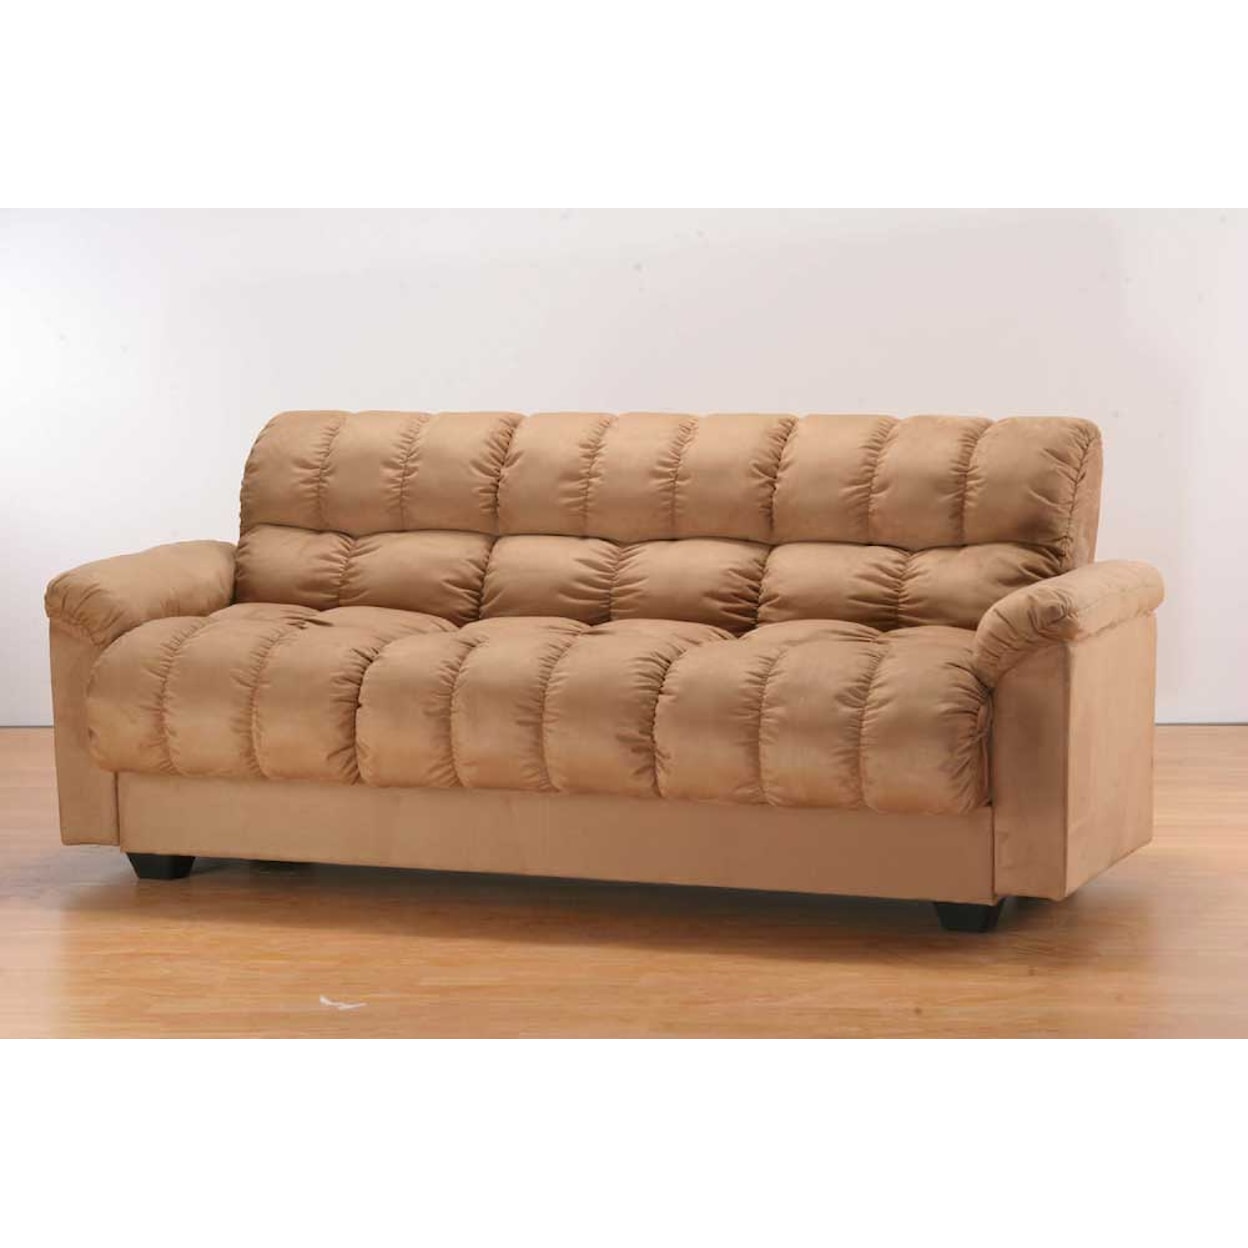 Primo International Sumac Futon Sofa